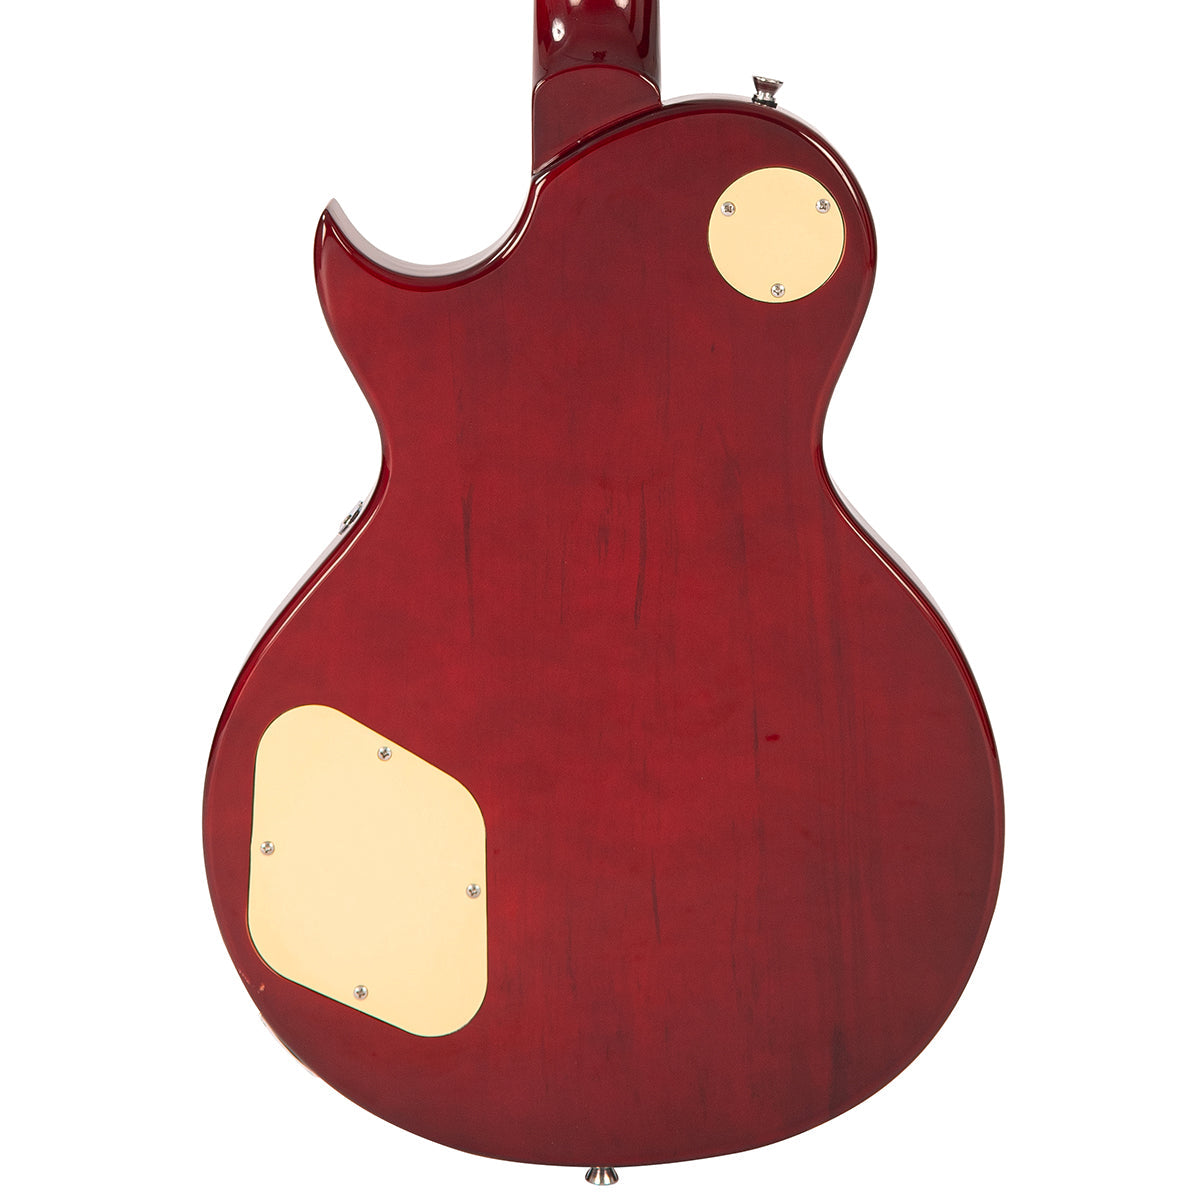 Vintage V10 Coaster Series Electric Guitar ~ Wine Red, Electric Guitar for sale at Richards Guitars.